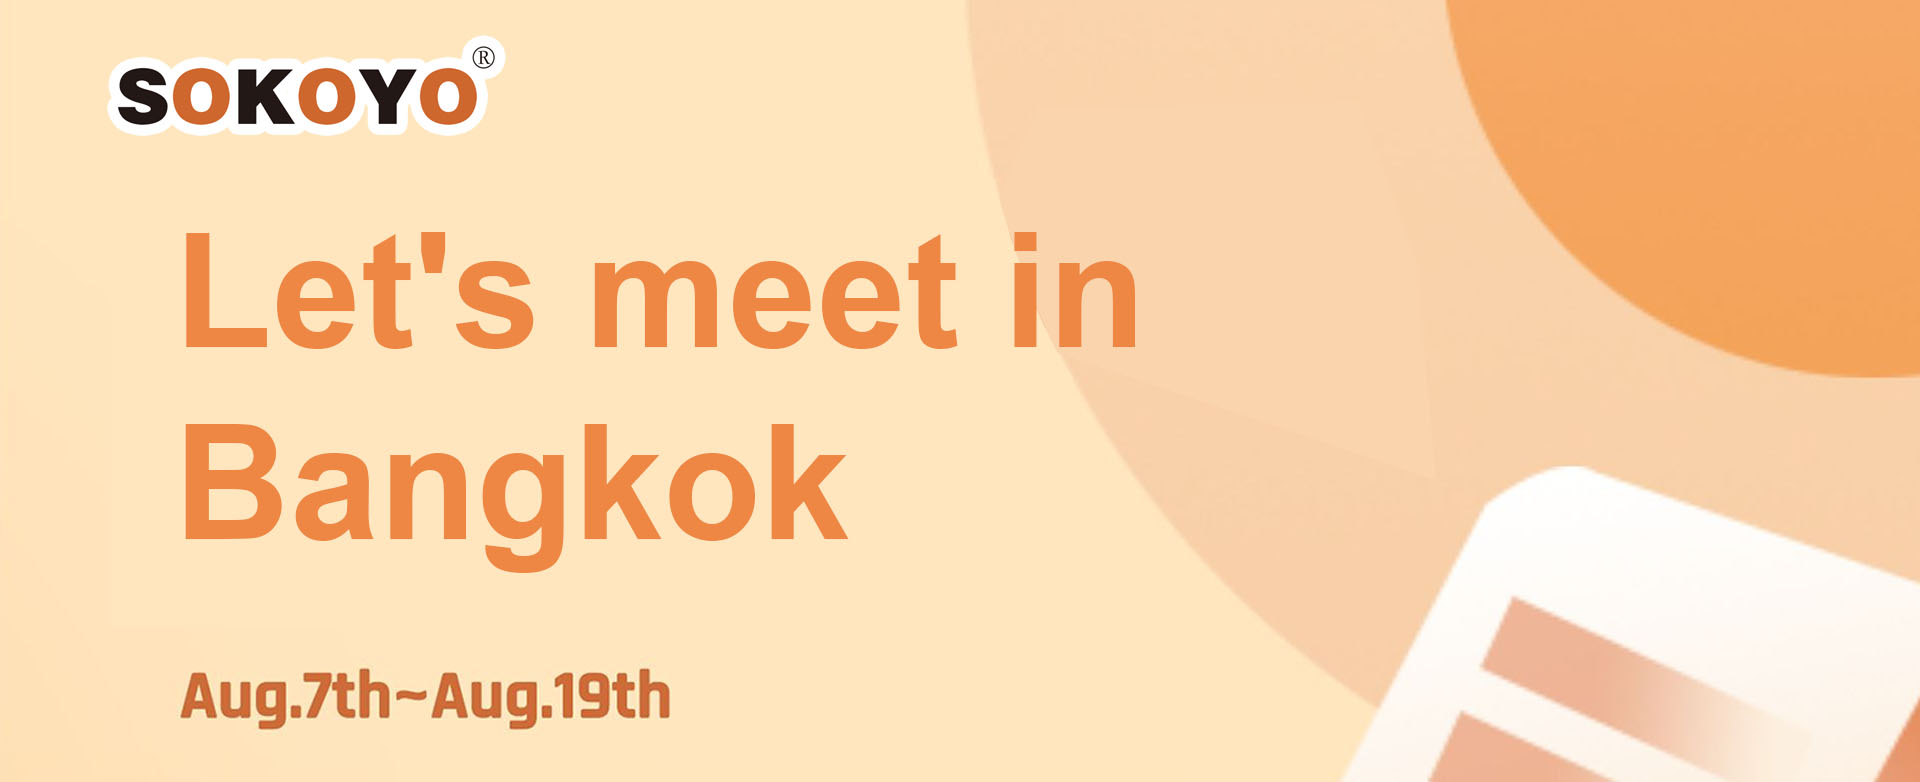 Let's meet in Bangkok